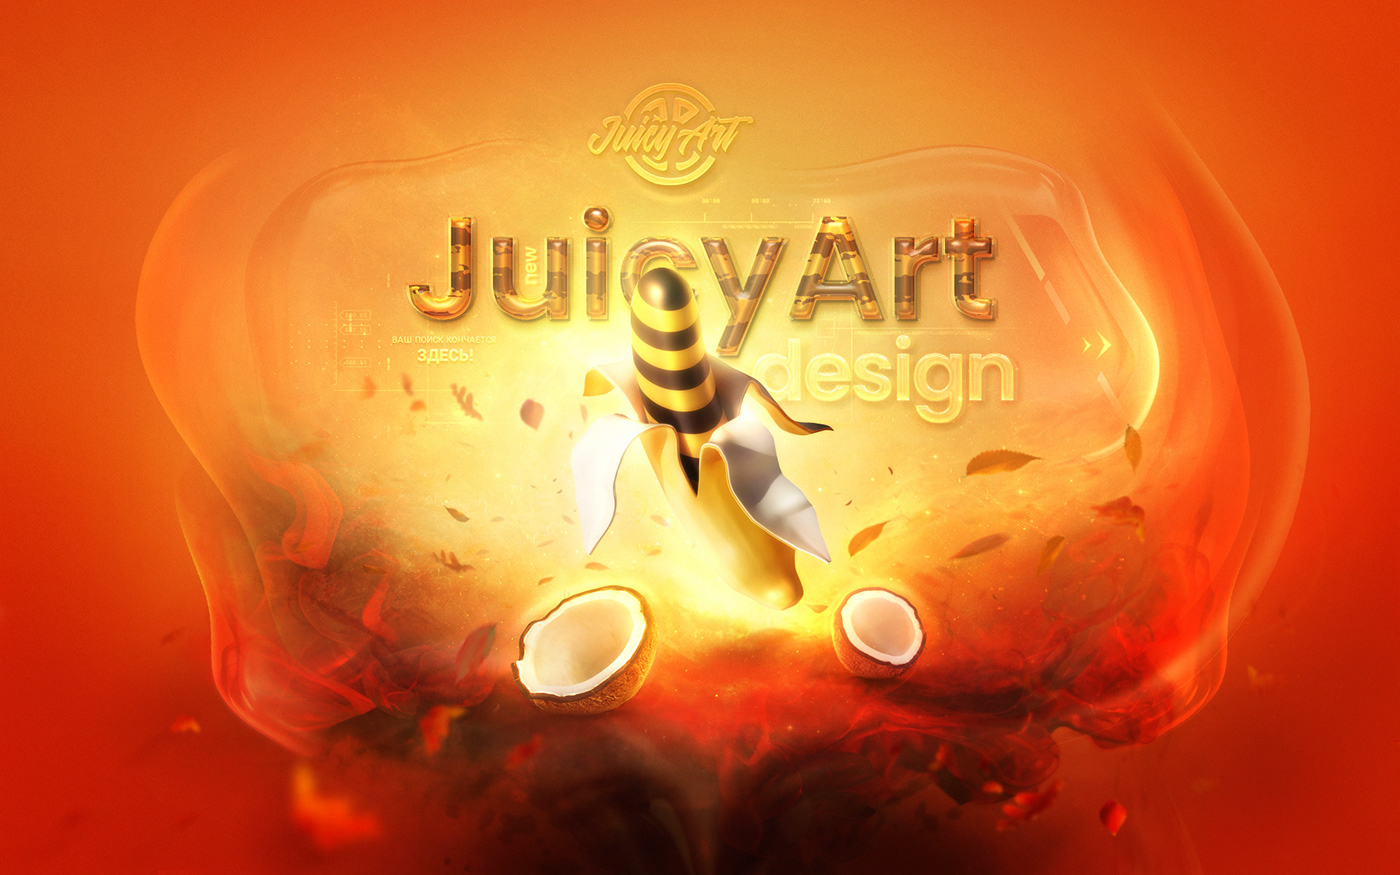 uiux studio juicyart студия creative banana Web Design  digital agency Website landing page